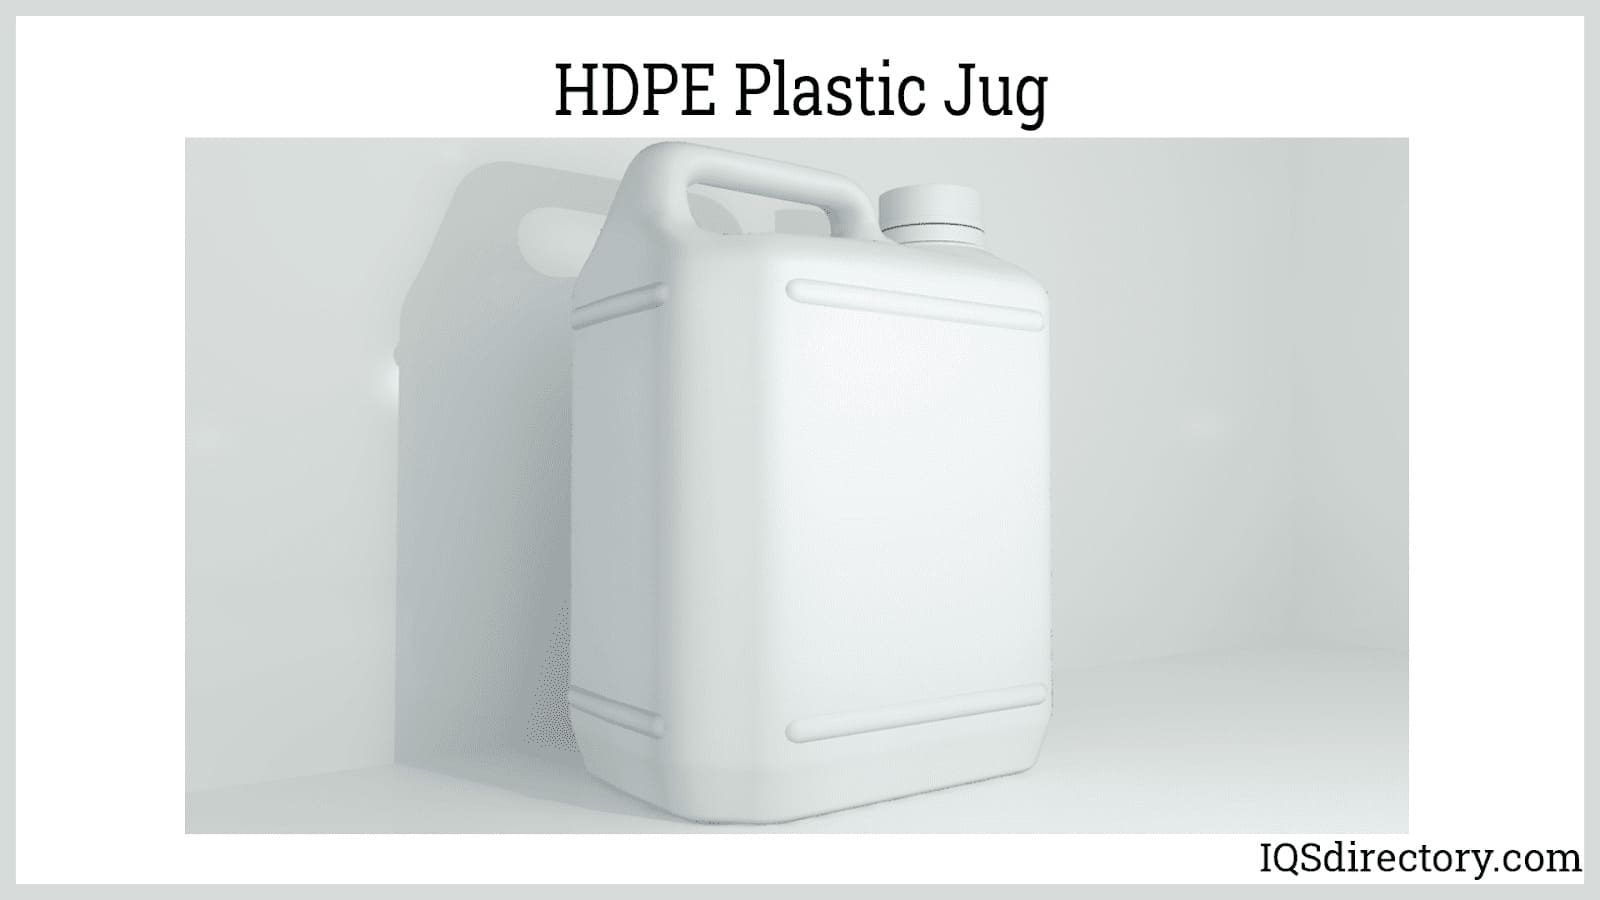 HDPE Plastic Jug